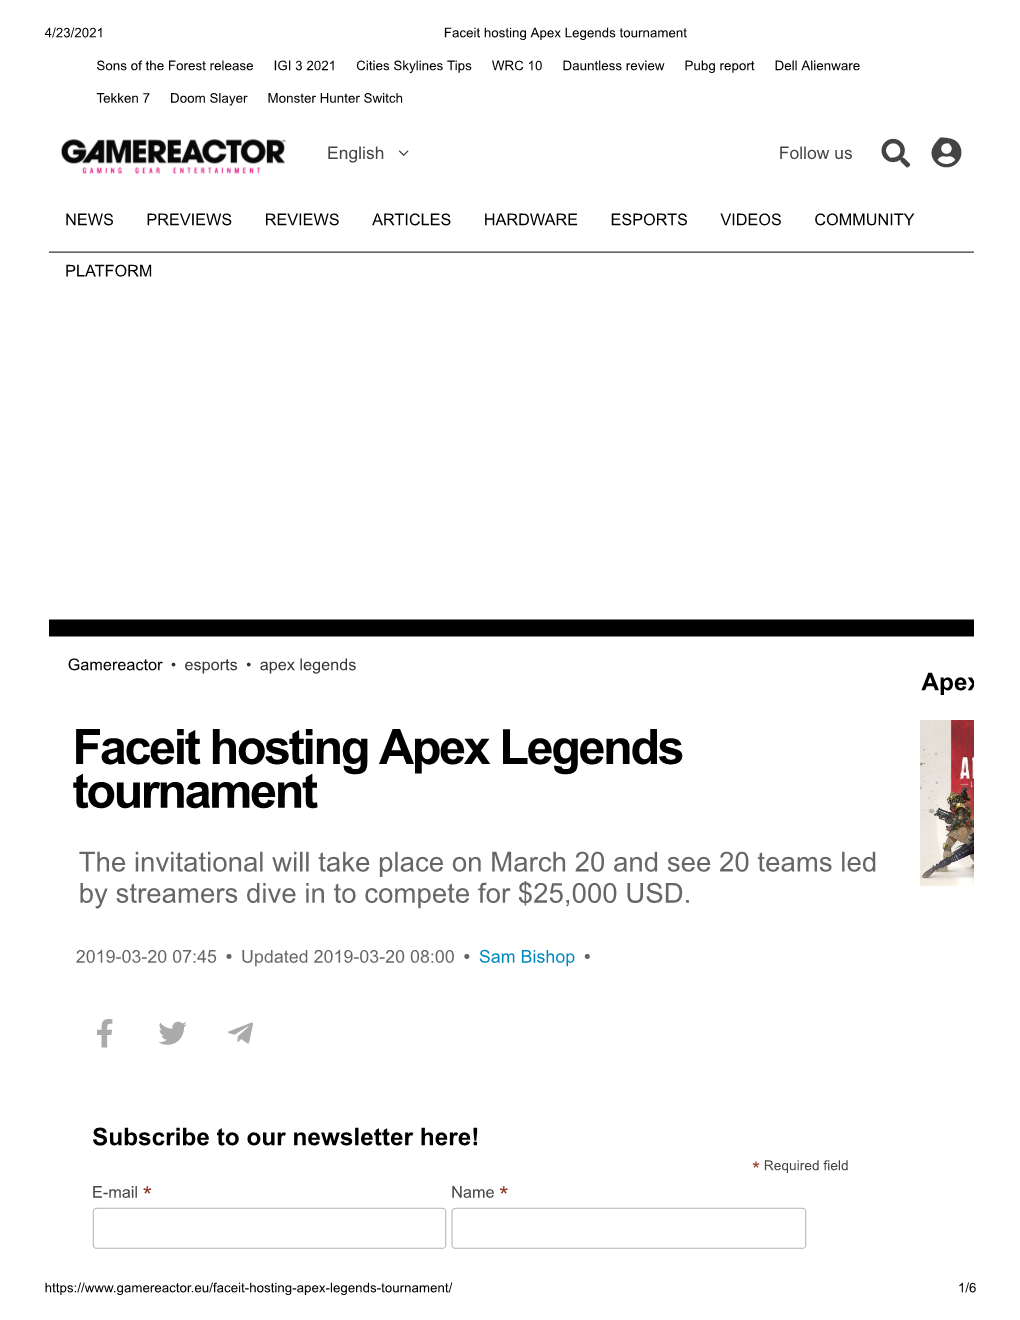 Faceit Hosting Apex Legends Tournament